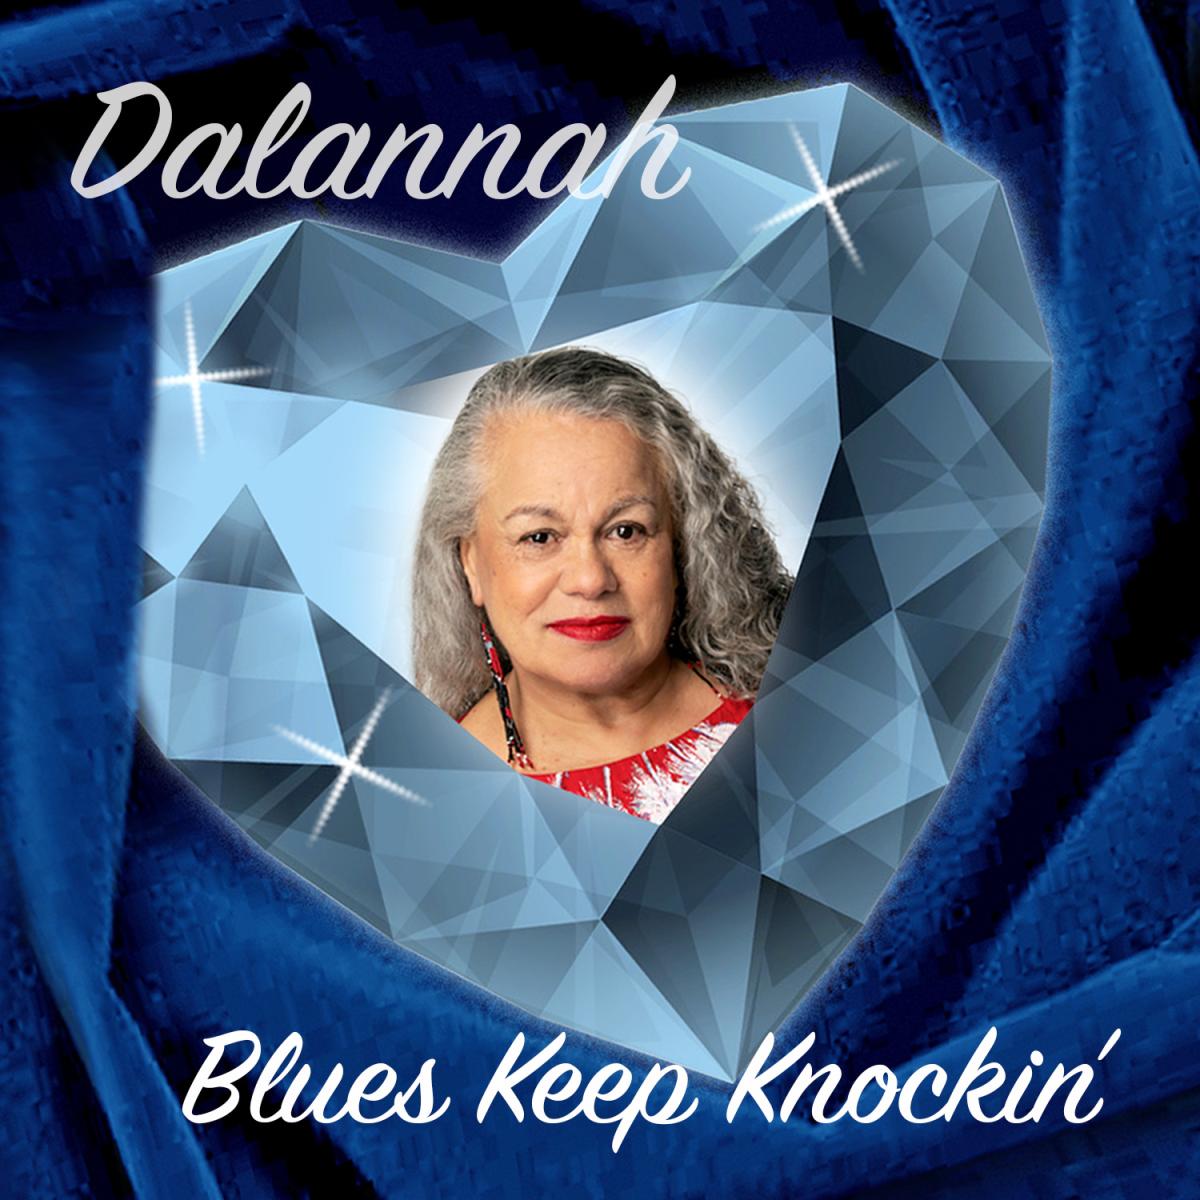 Blues Matriarch Dalannah Celebrates Releases Song of Sorrow  with New Single“Blues Keep Knockin’”